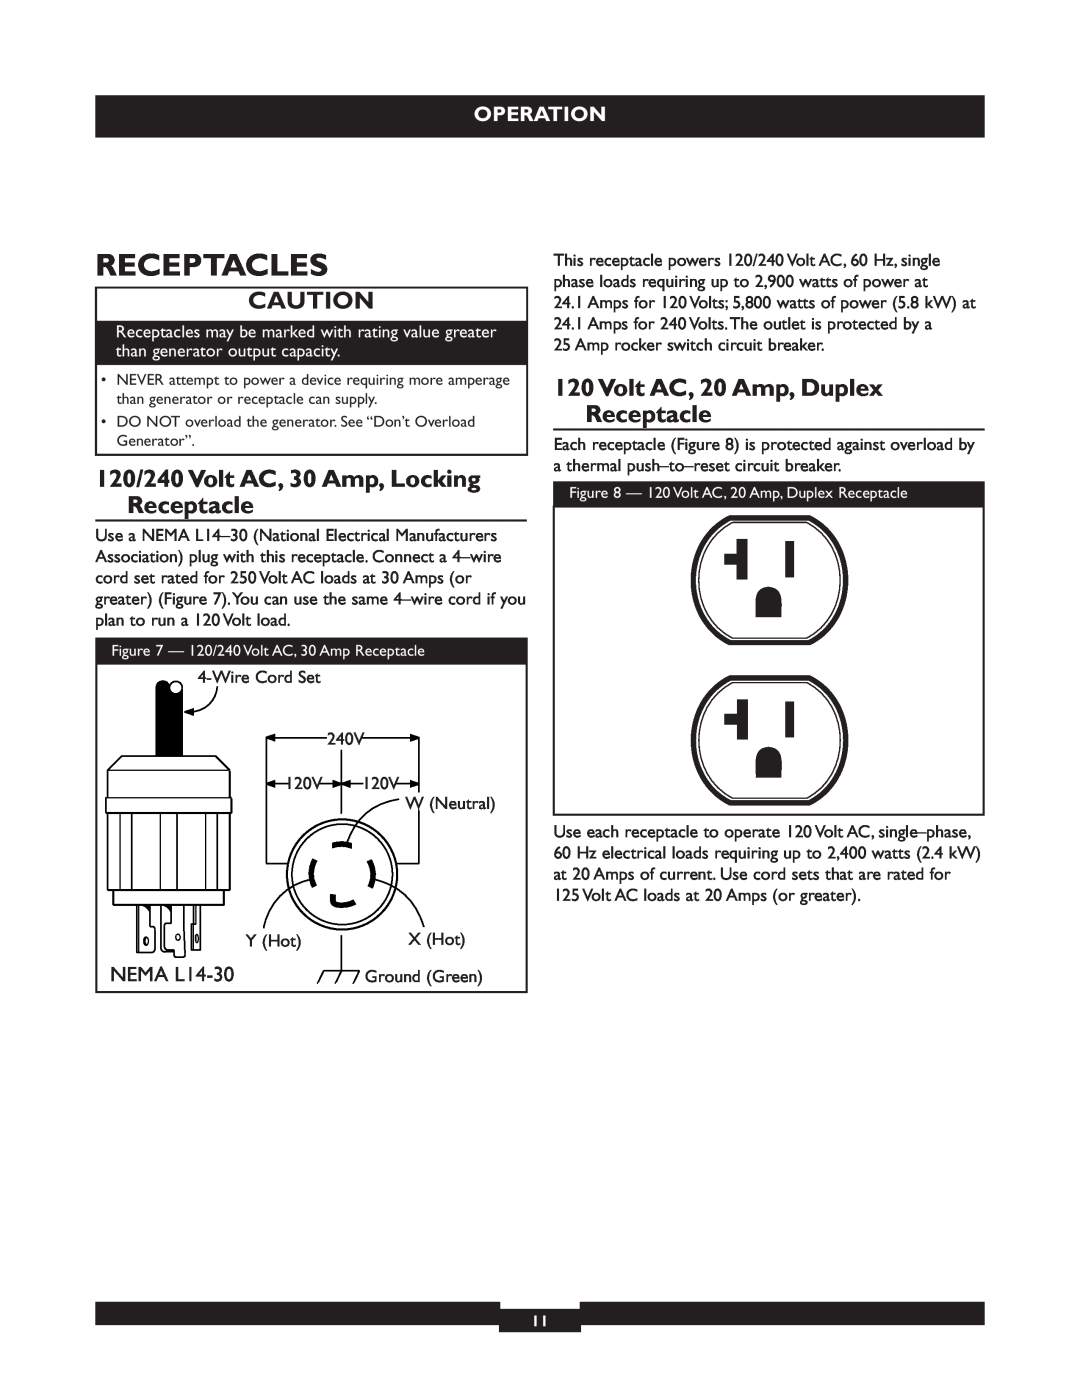 Briggs & Stratton 30205 manual Receptacles, 120/240 Volt AC, 30 Amp, Locking Receptacle, Volt AC, 20 Amp, Duplex Receptacle 